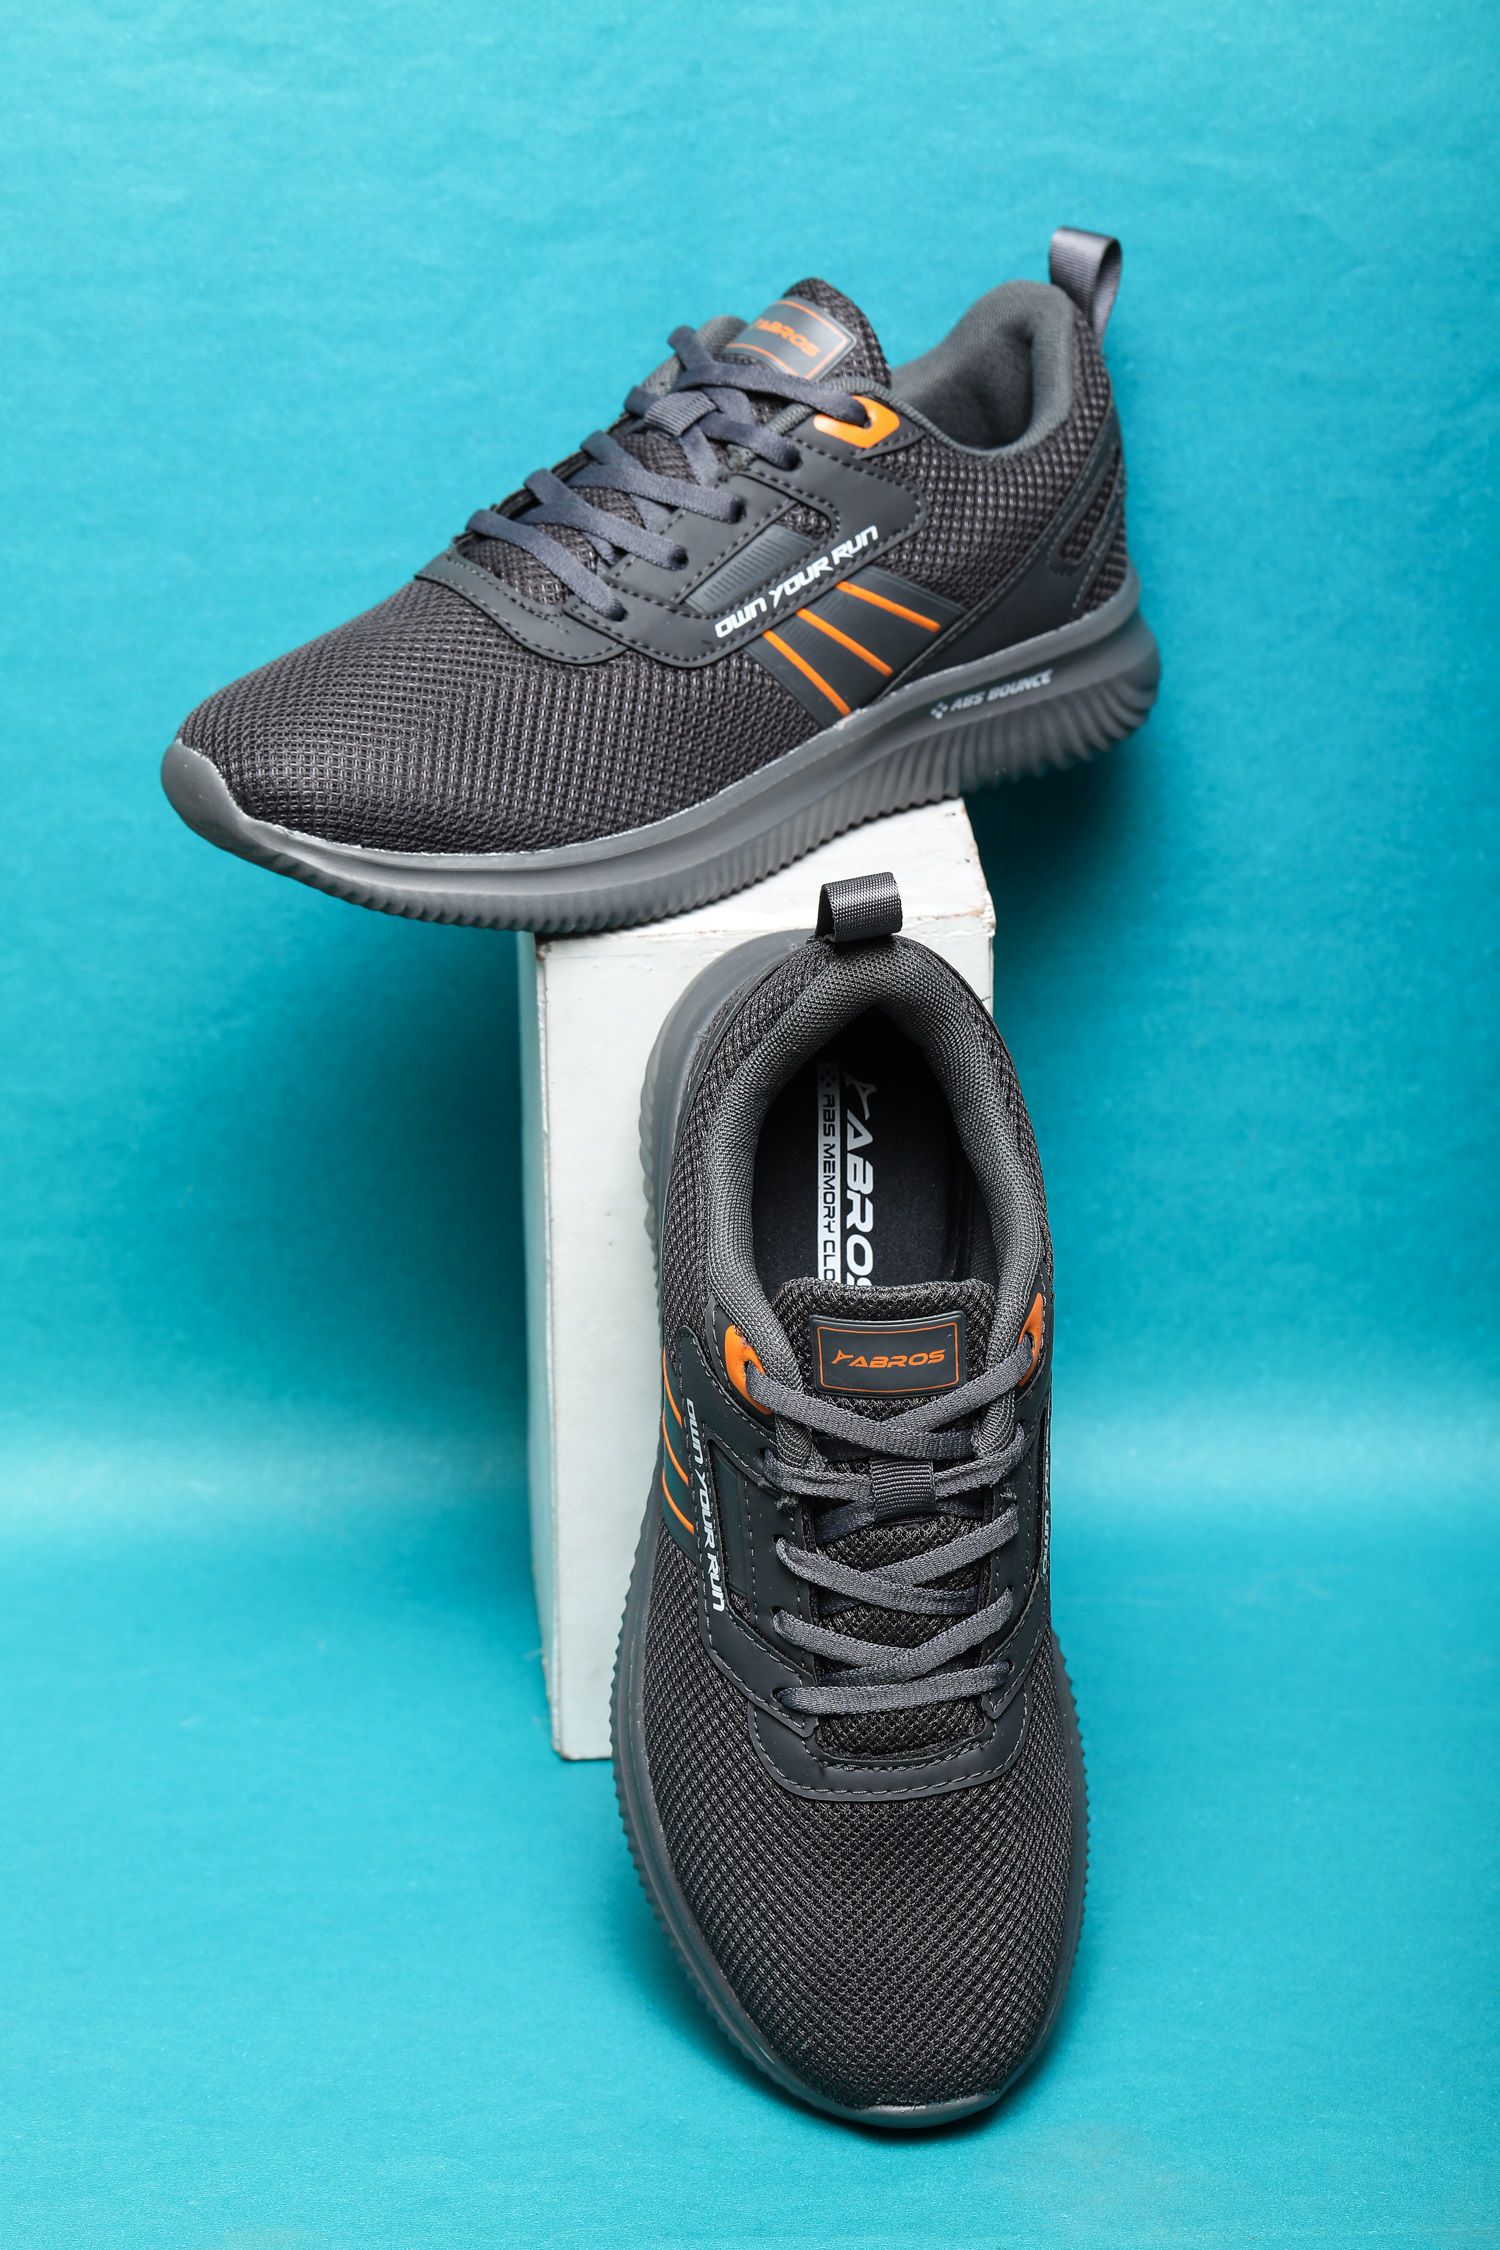     			Abros CHRIS Dark Grey Men's Sports Running Shoes